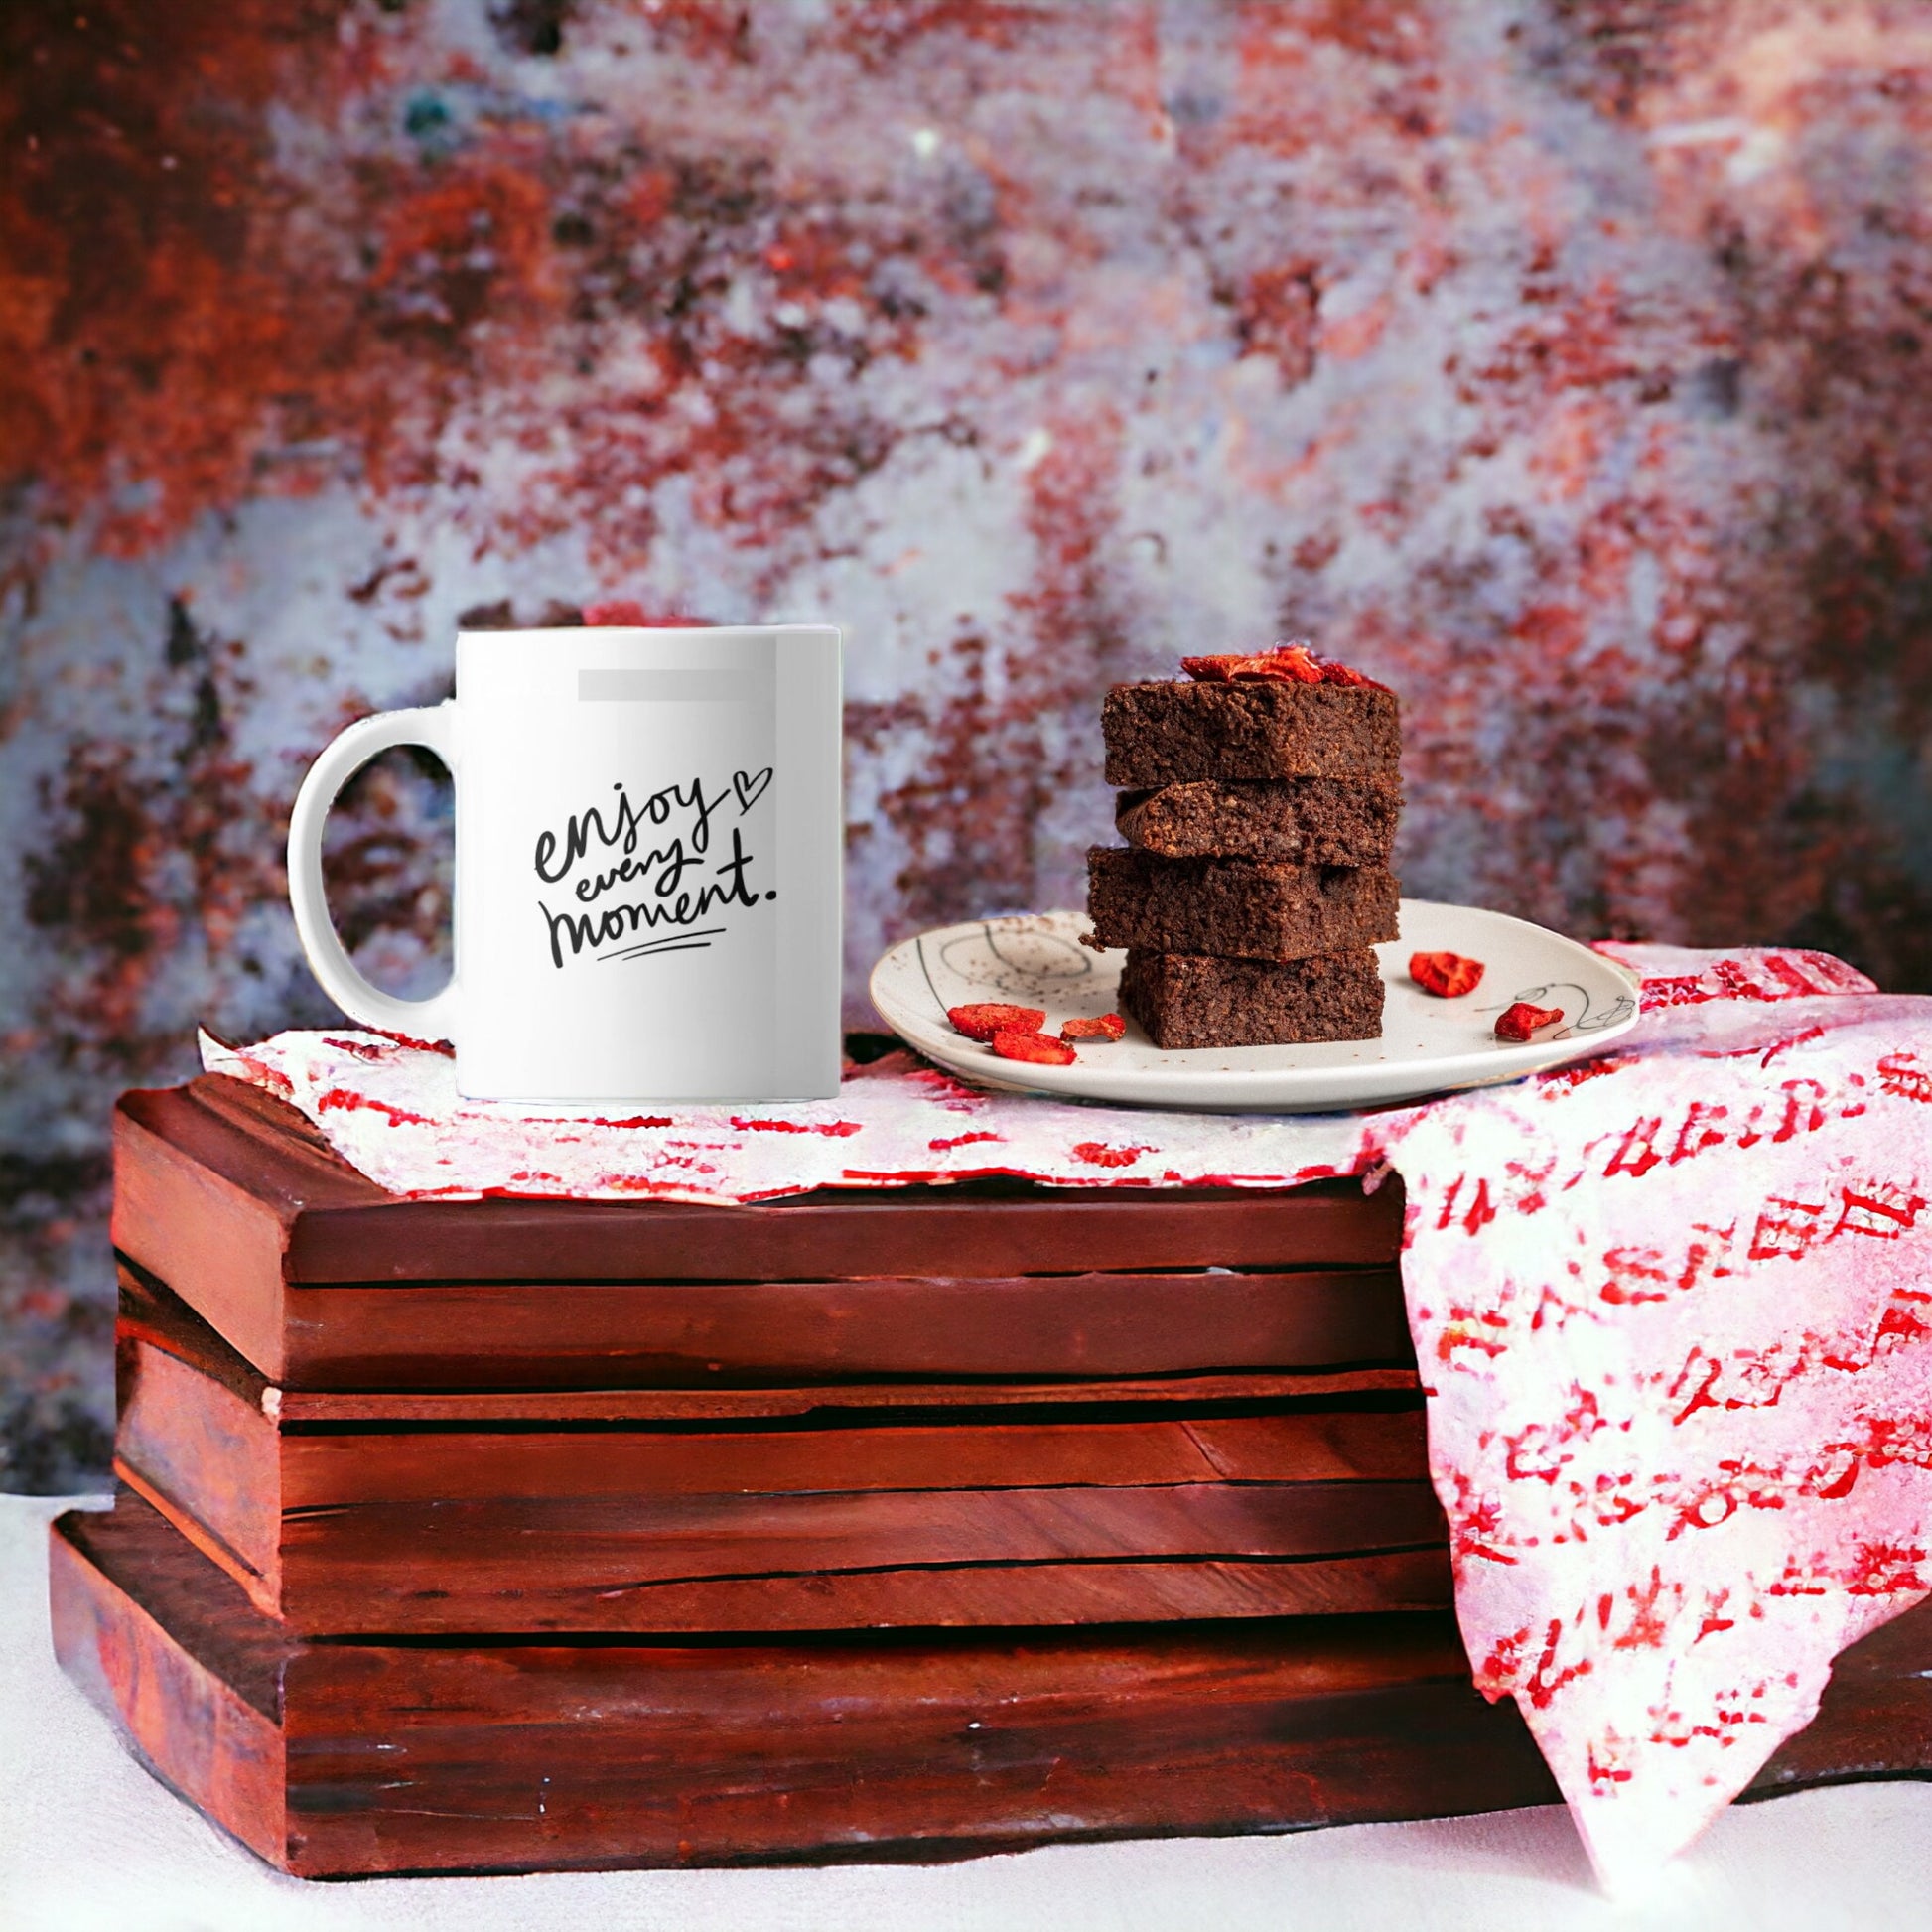 Buy or Send 2 Walnut Brownies and New Year Wish Mug BY Bakers Wagon